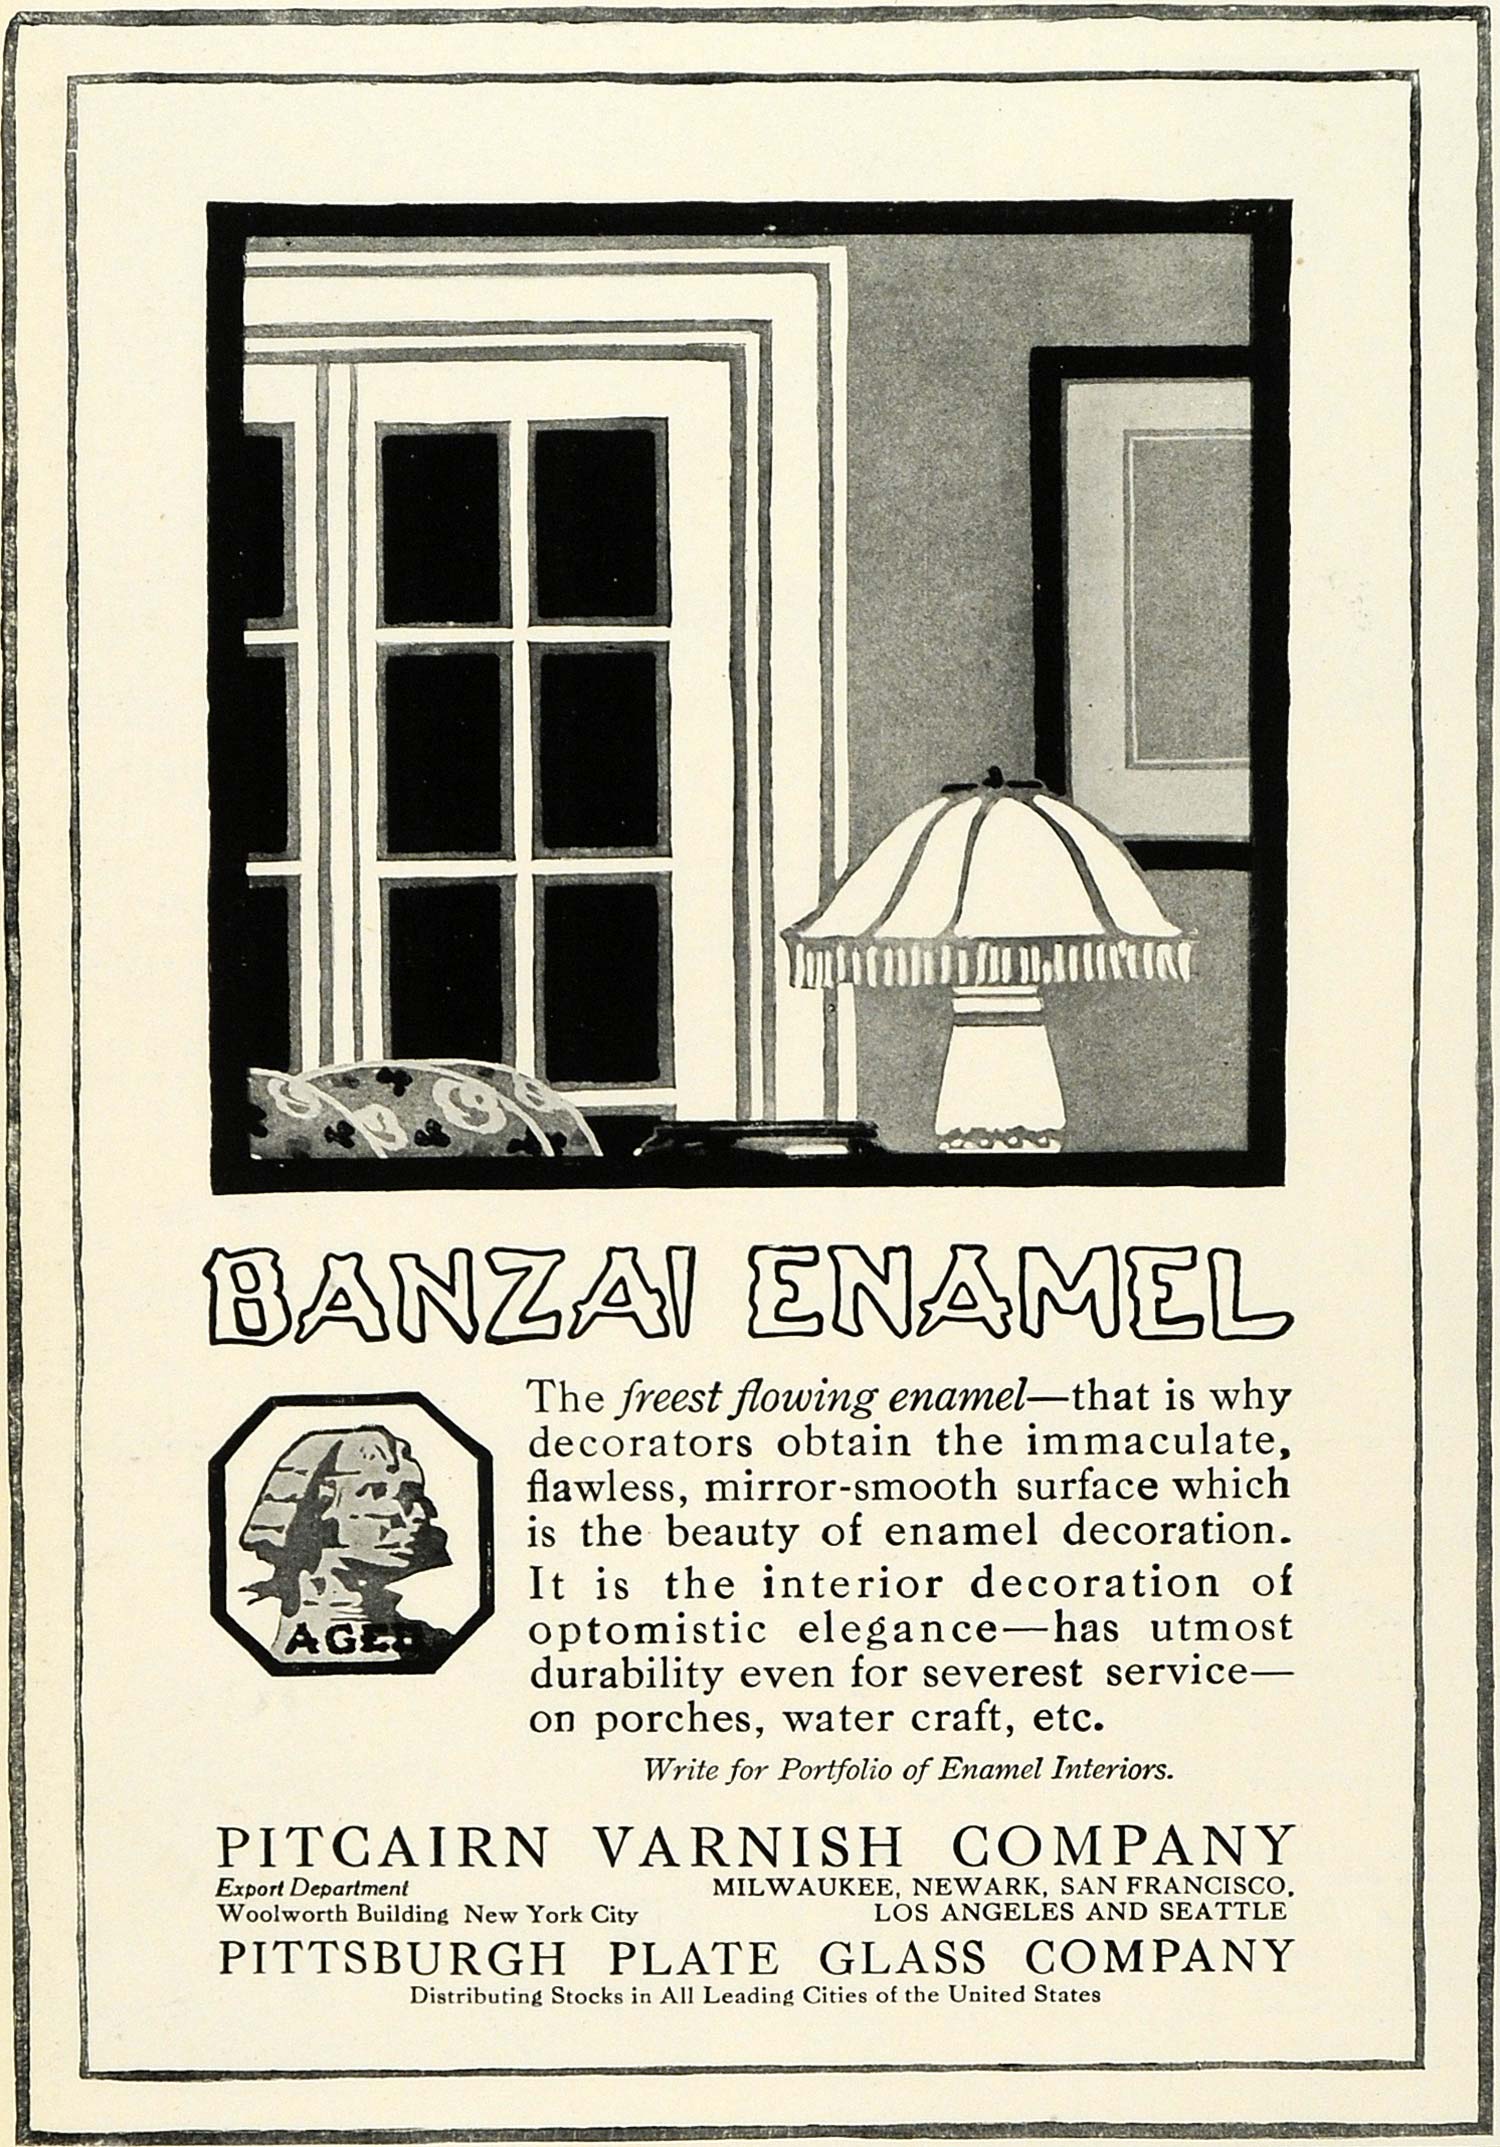 1920 Ad Pitcairn Varnish Co Banzai Enamel Decoration Interior Design Coating HB2